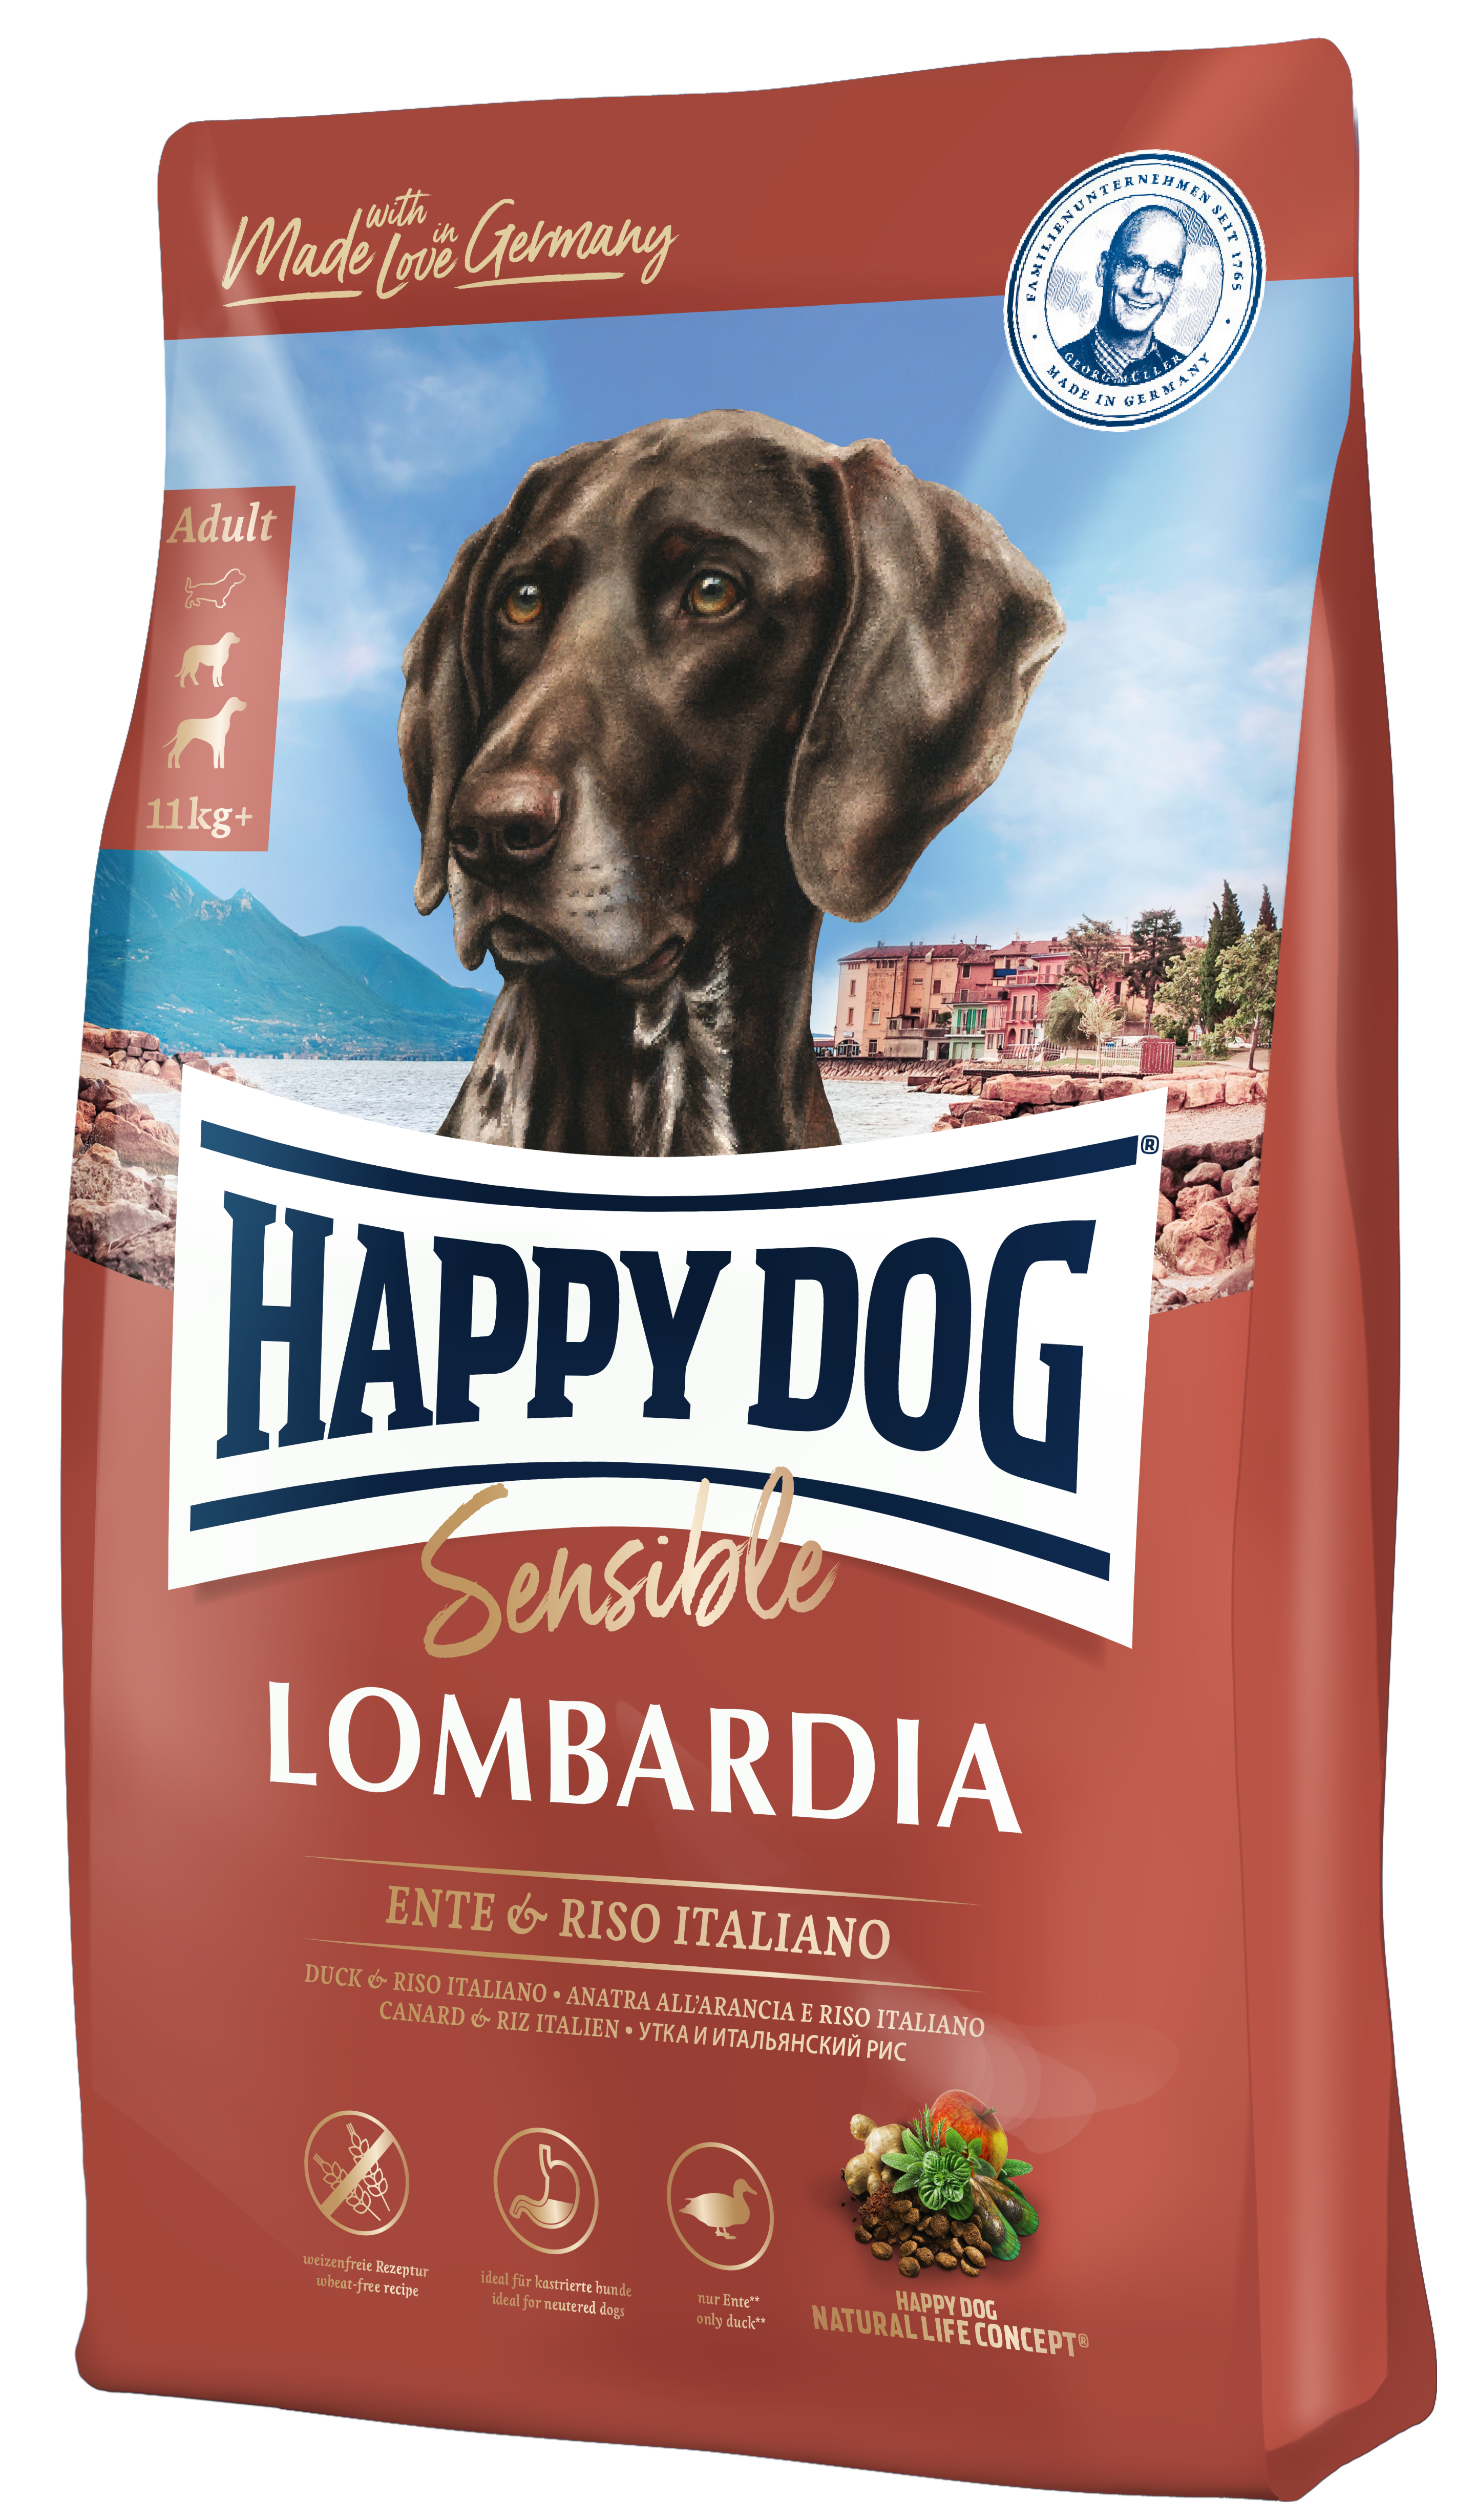 Happy Dog Sensible Lombardia 300 g